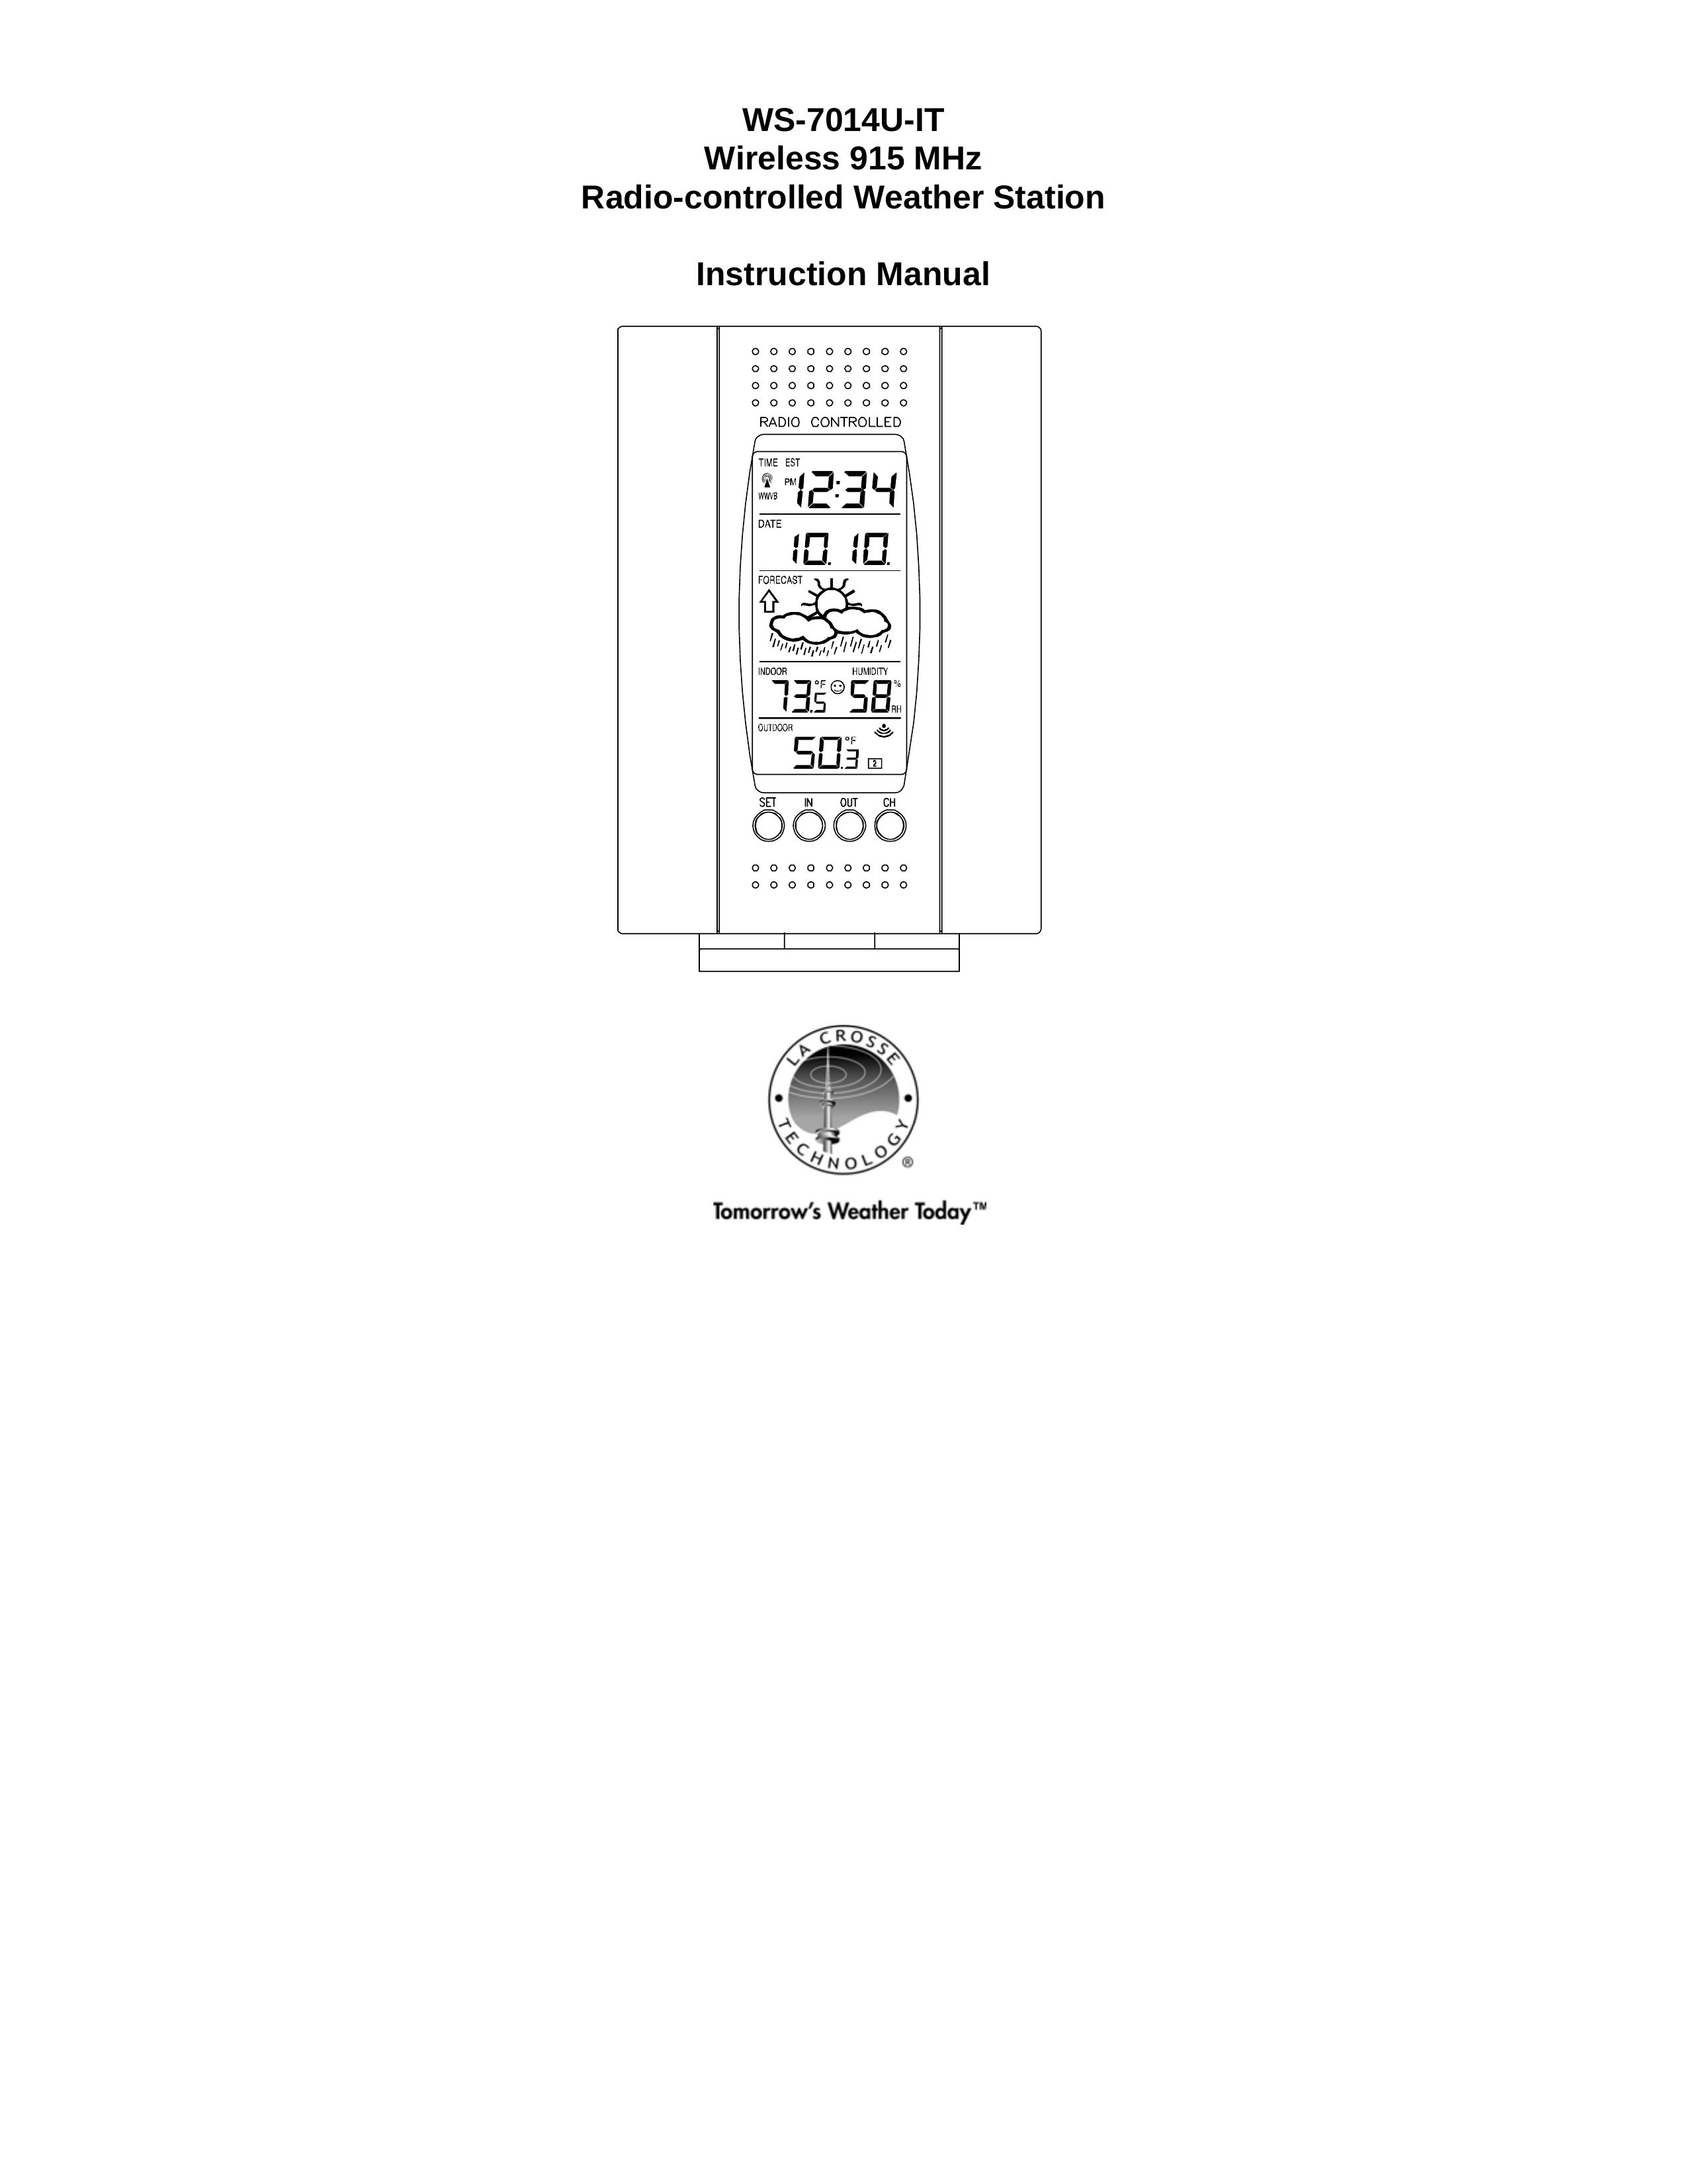 La Crosse Technology WS-7014U-IT Weather Radio User Manual